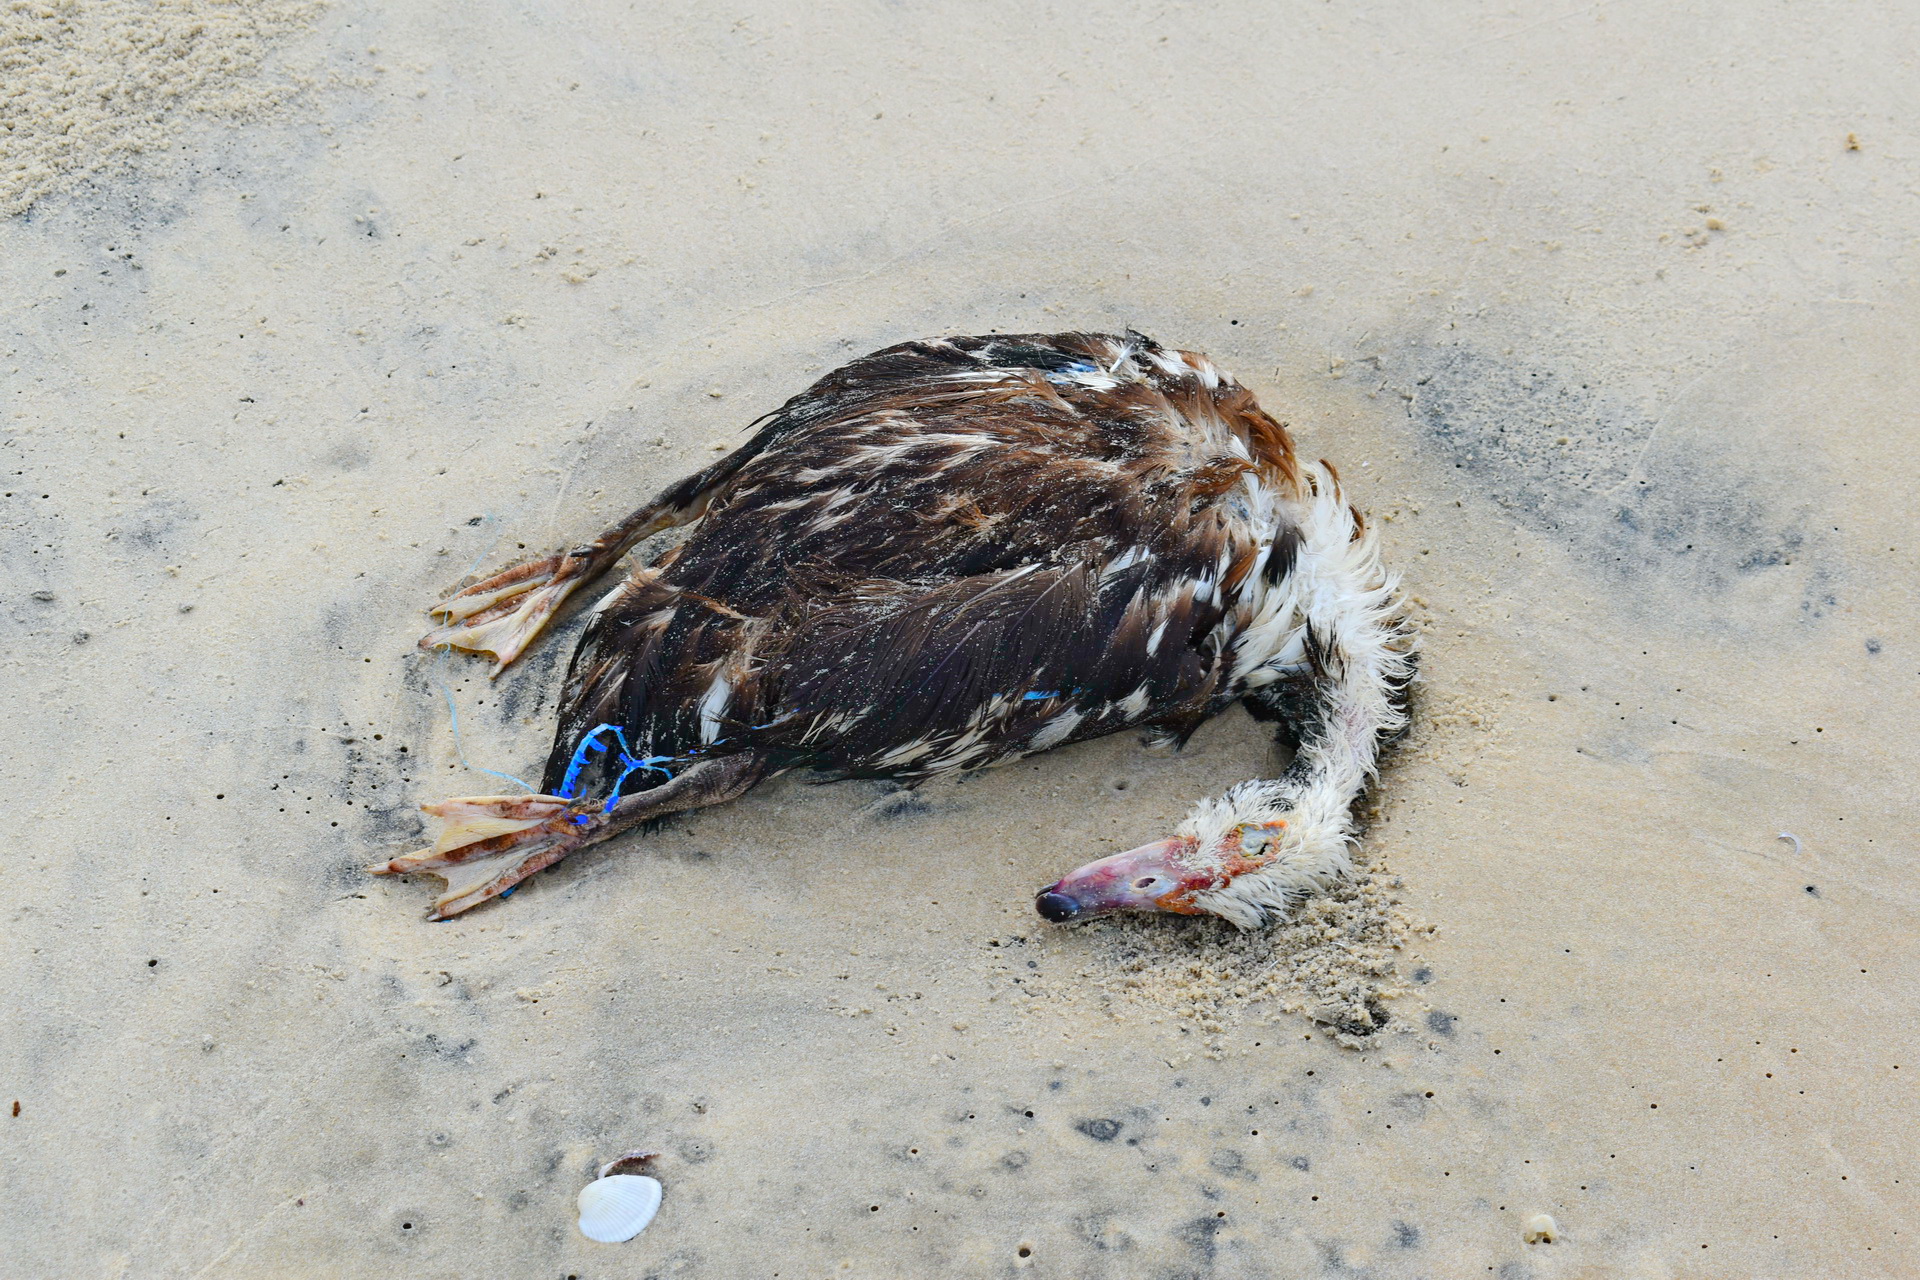 A dead bird washes up on shore at the Ke Ga Beach in Binh Thuan Province, Vietnam. Photo: Tuan Son / Tuoi Tre News